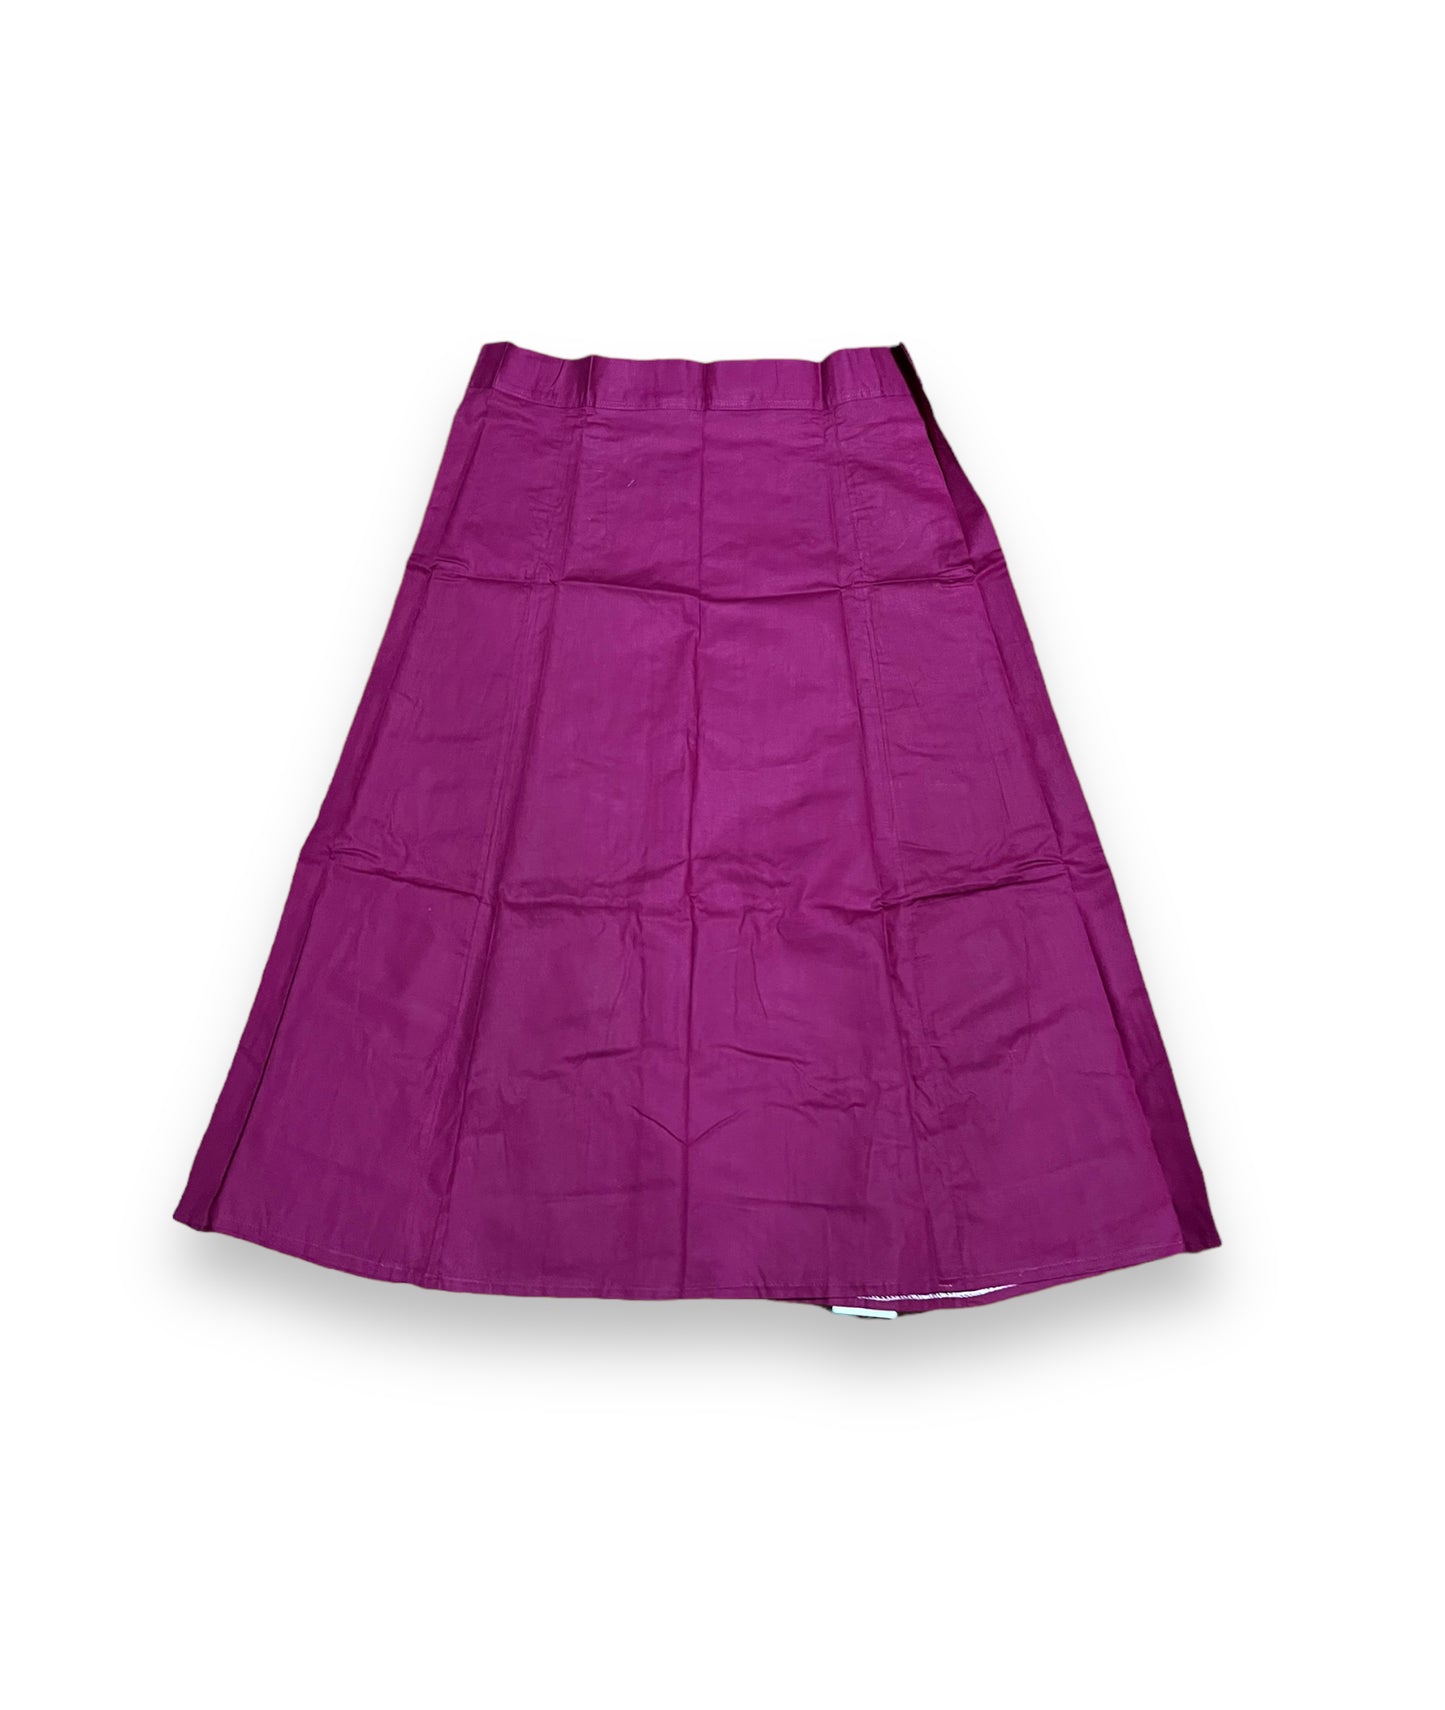 Essential Plain Cotton Petticoat for Women-09 – Saree Ghor Charlotte